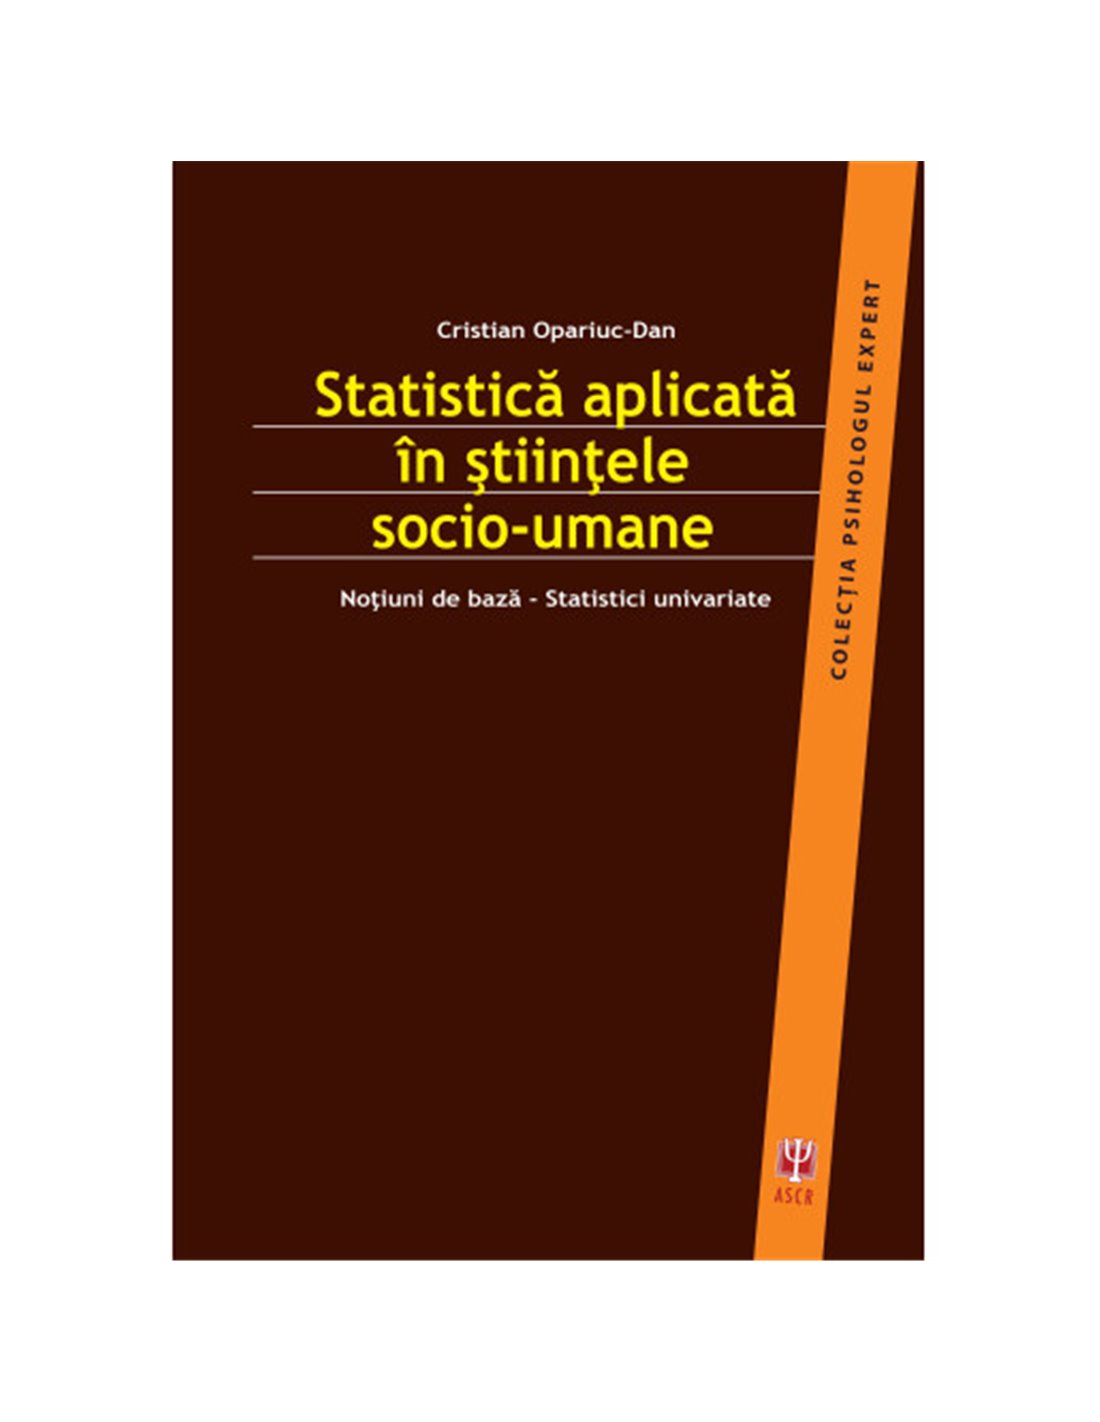 Statistica aplicata in stiintele socio-umane - Cristian Opariuc-Dan | Editura ASCR